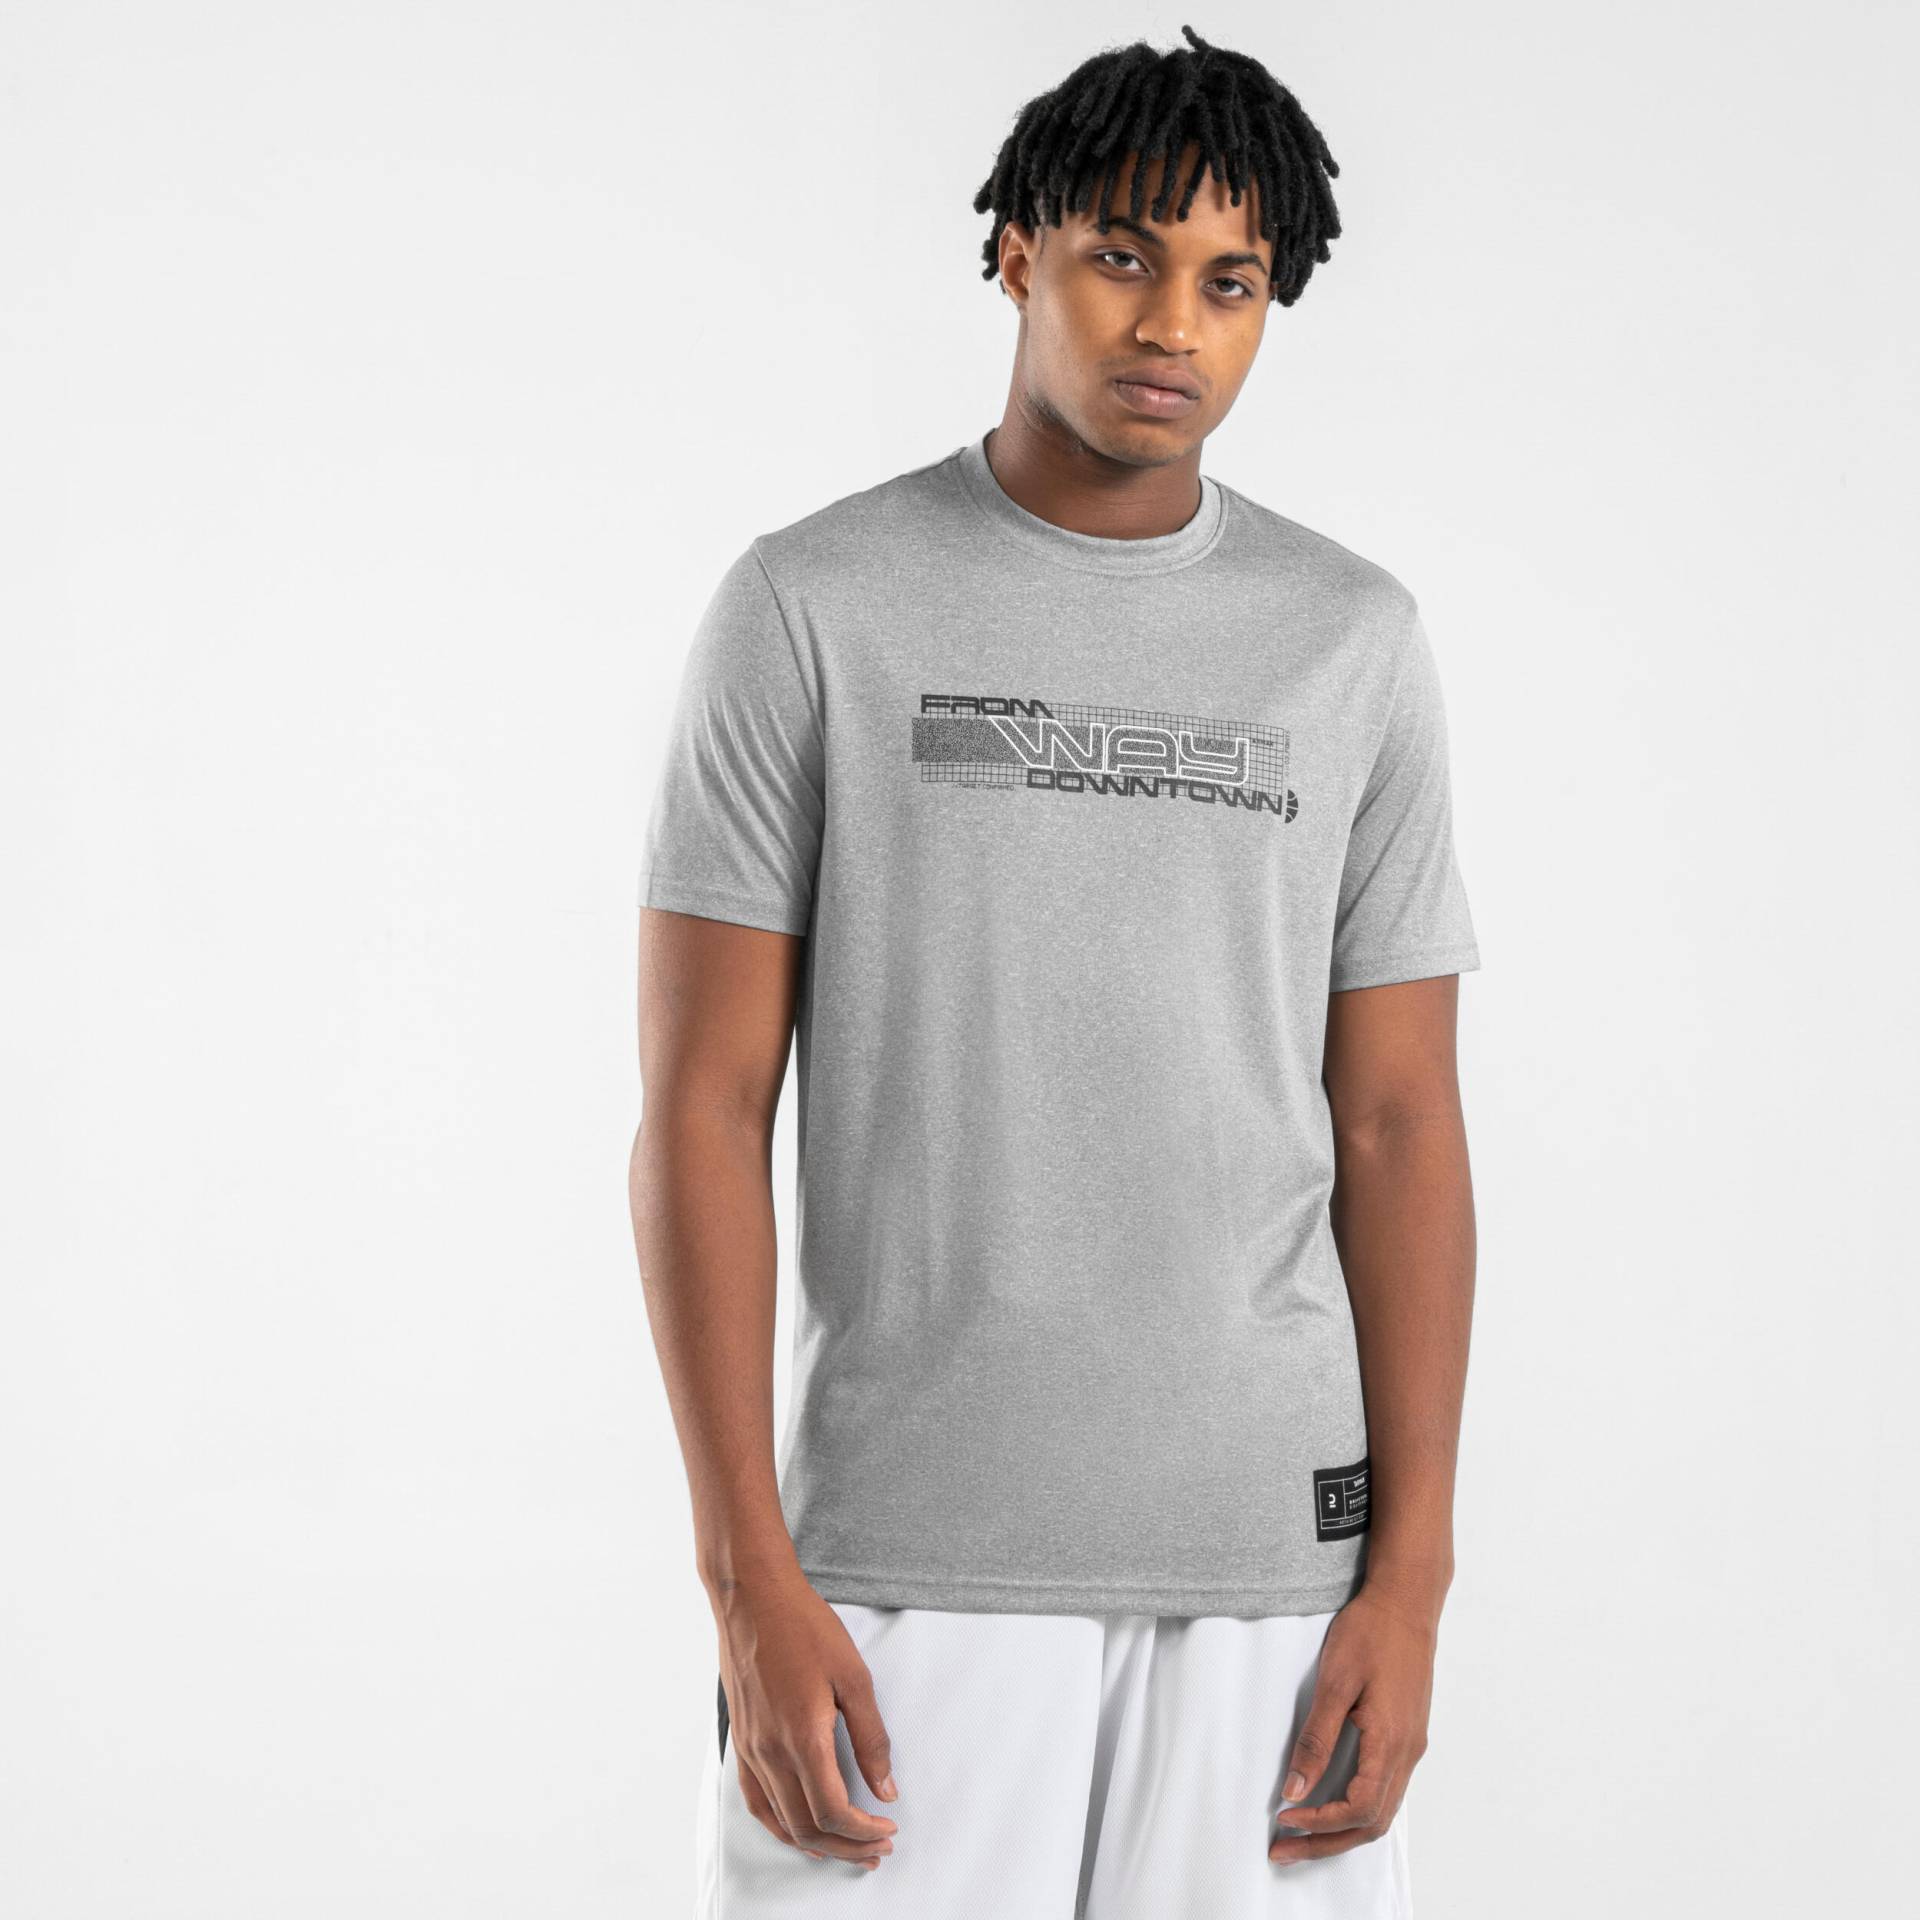 Herren Basketball T-Shirt - TS500 Fast grau von TARMAK